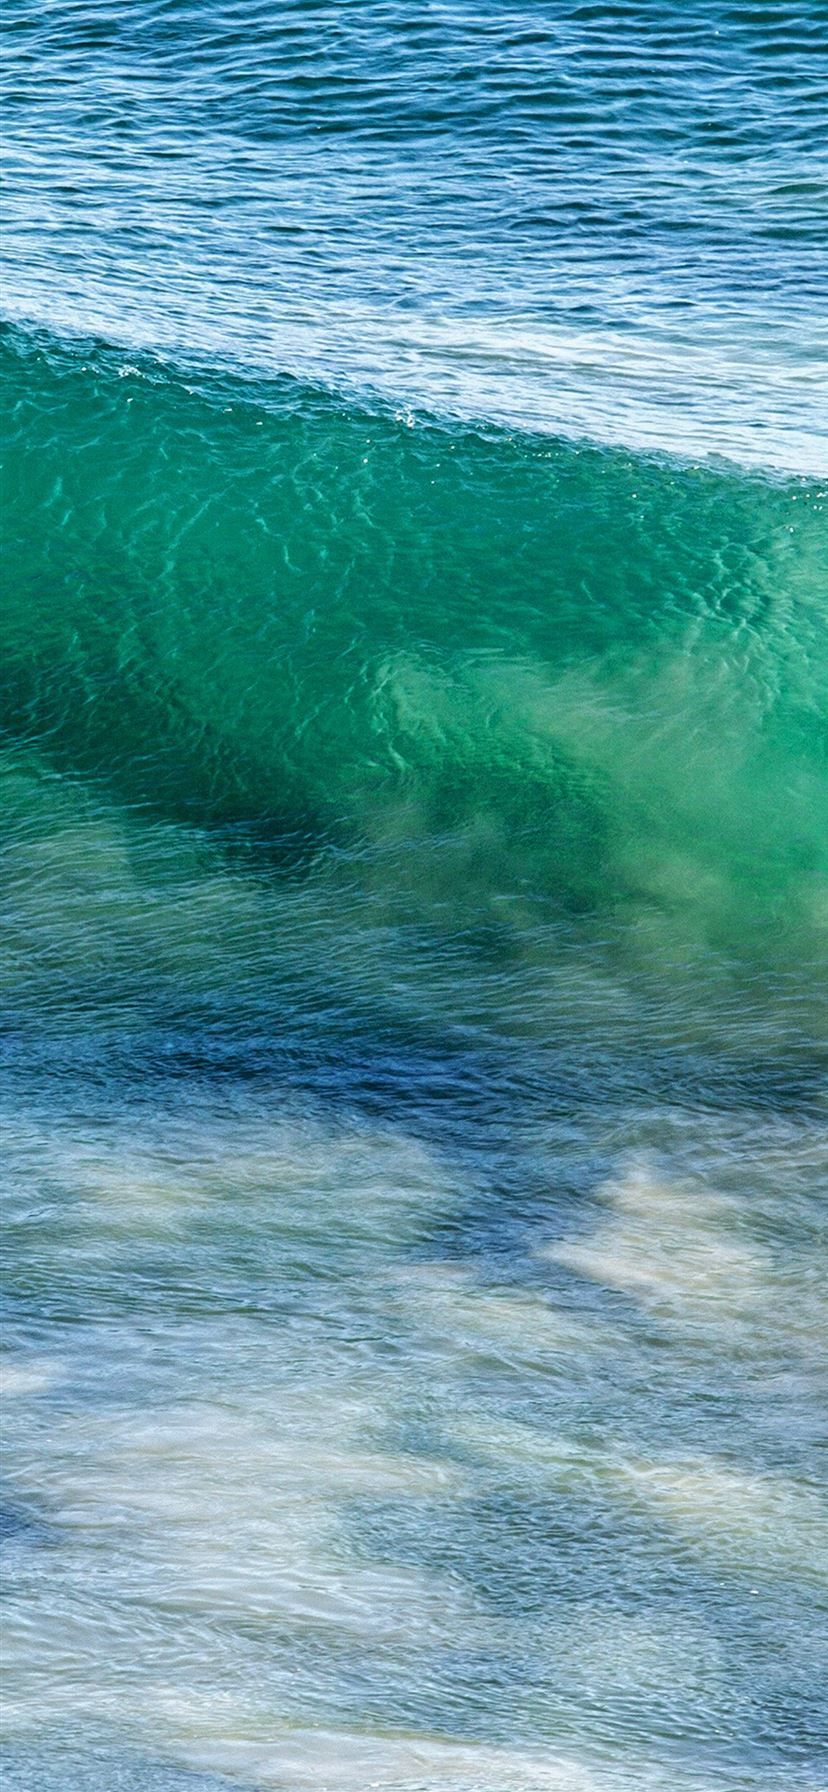 Sea wave ocean summer fun iPhone X Wallpaper Free Download